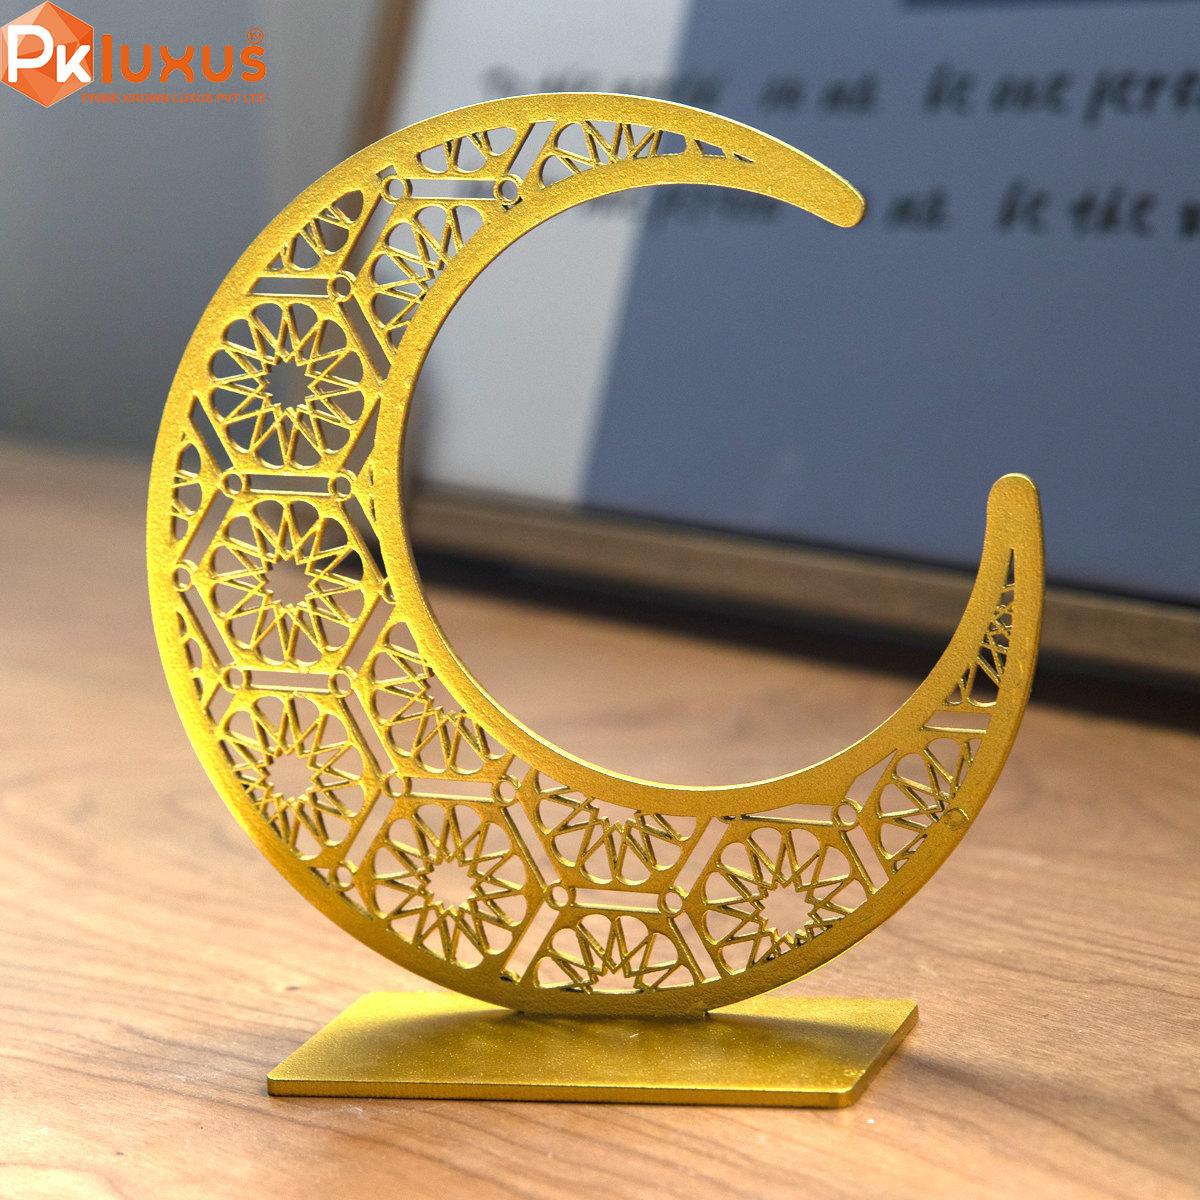 Golden Moon Skeleton Wooden Craft Ornament | Table Decoration | PK LUXUS™ - PK LUXUS